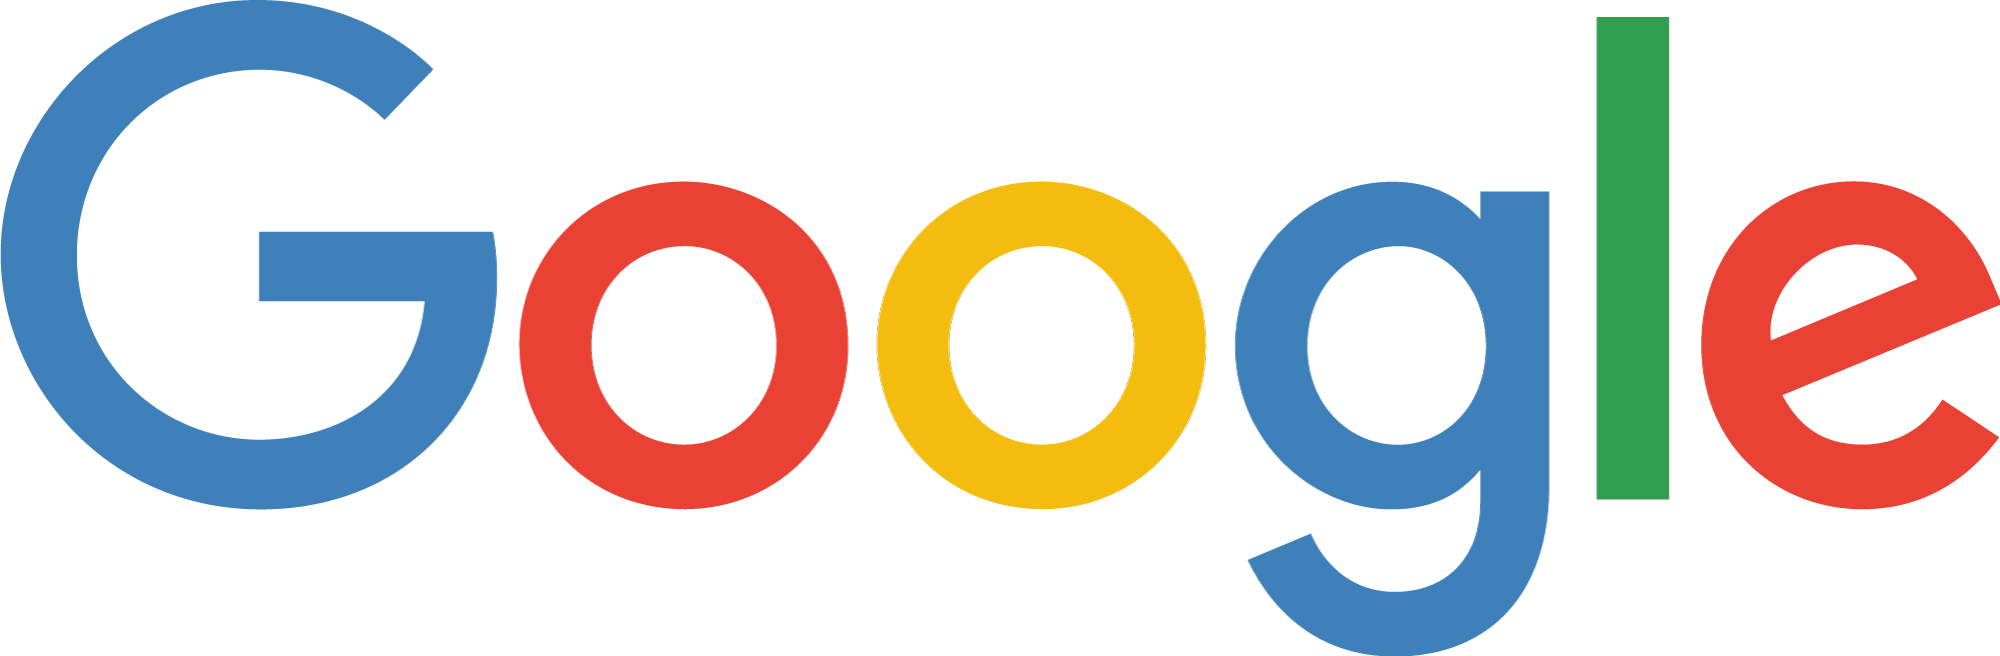 Google Logo Png Images with transparent Background